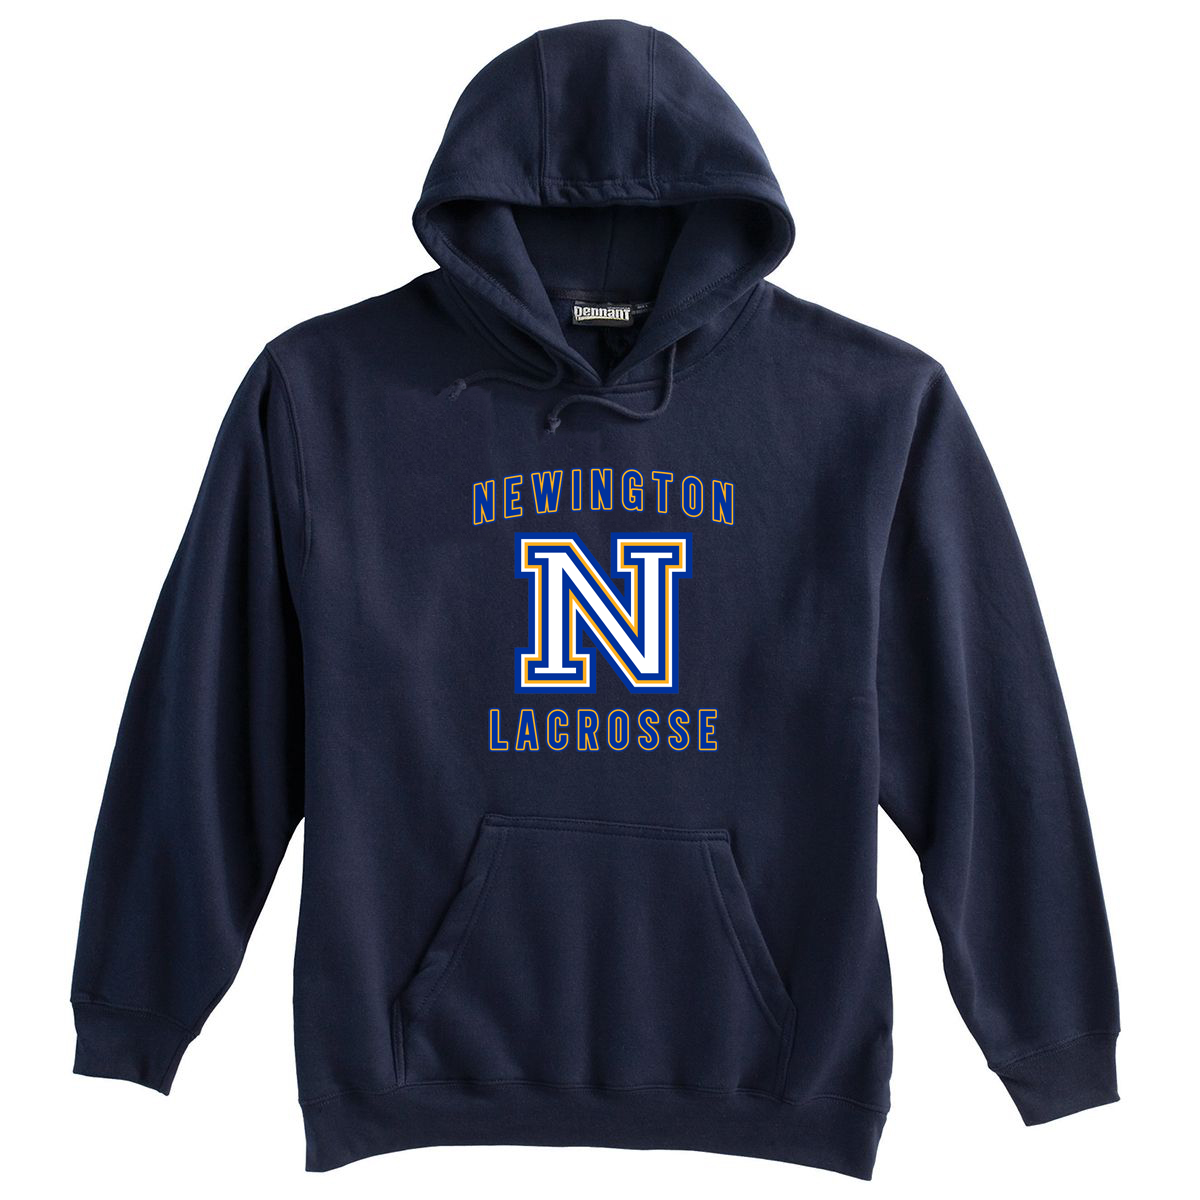 Newington Lacrosse Navy Sweatshirt